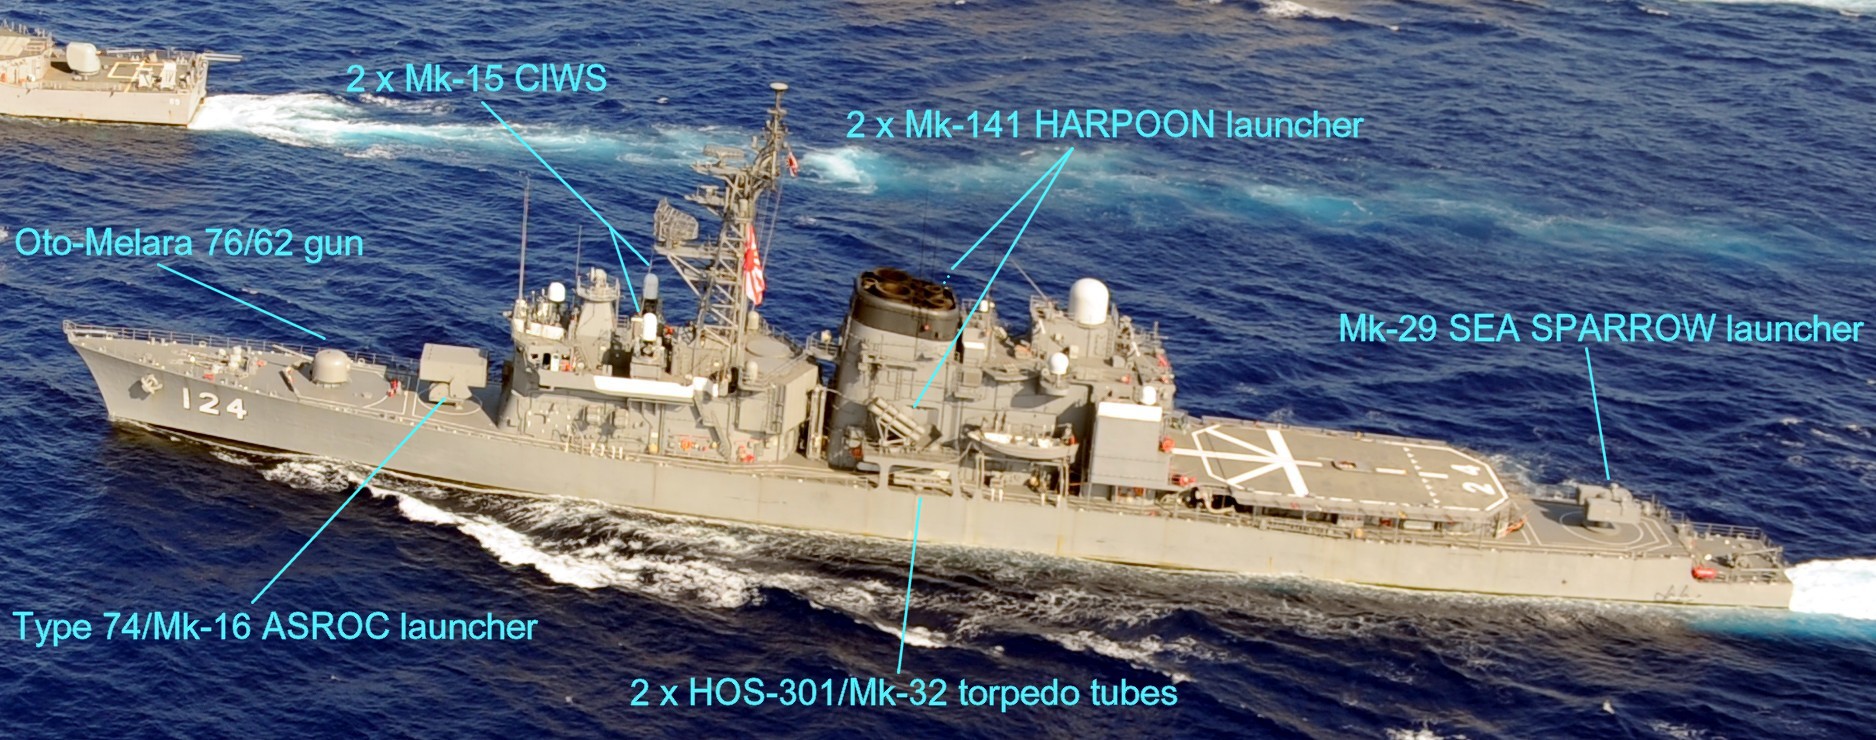 hatsuyuki class destroyer armament oto melara 76/62 gun mk-141 launcher rgm-84 harpoon ssm missile mk-29 rim-7 sea sparrow mk-15 phalanx ciws type-74 mk-16 asroc rur-5 hos-301 mk-32 torpedo tubes mk-46